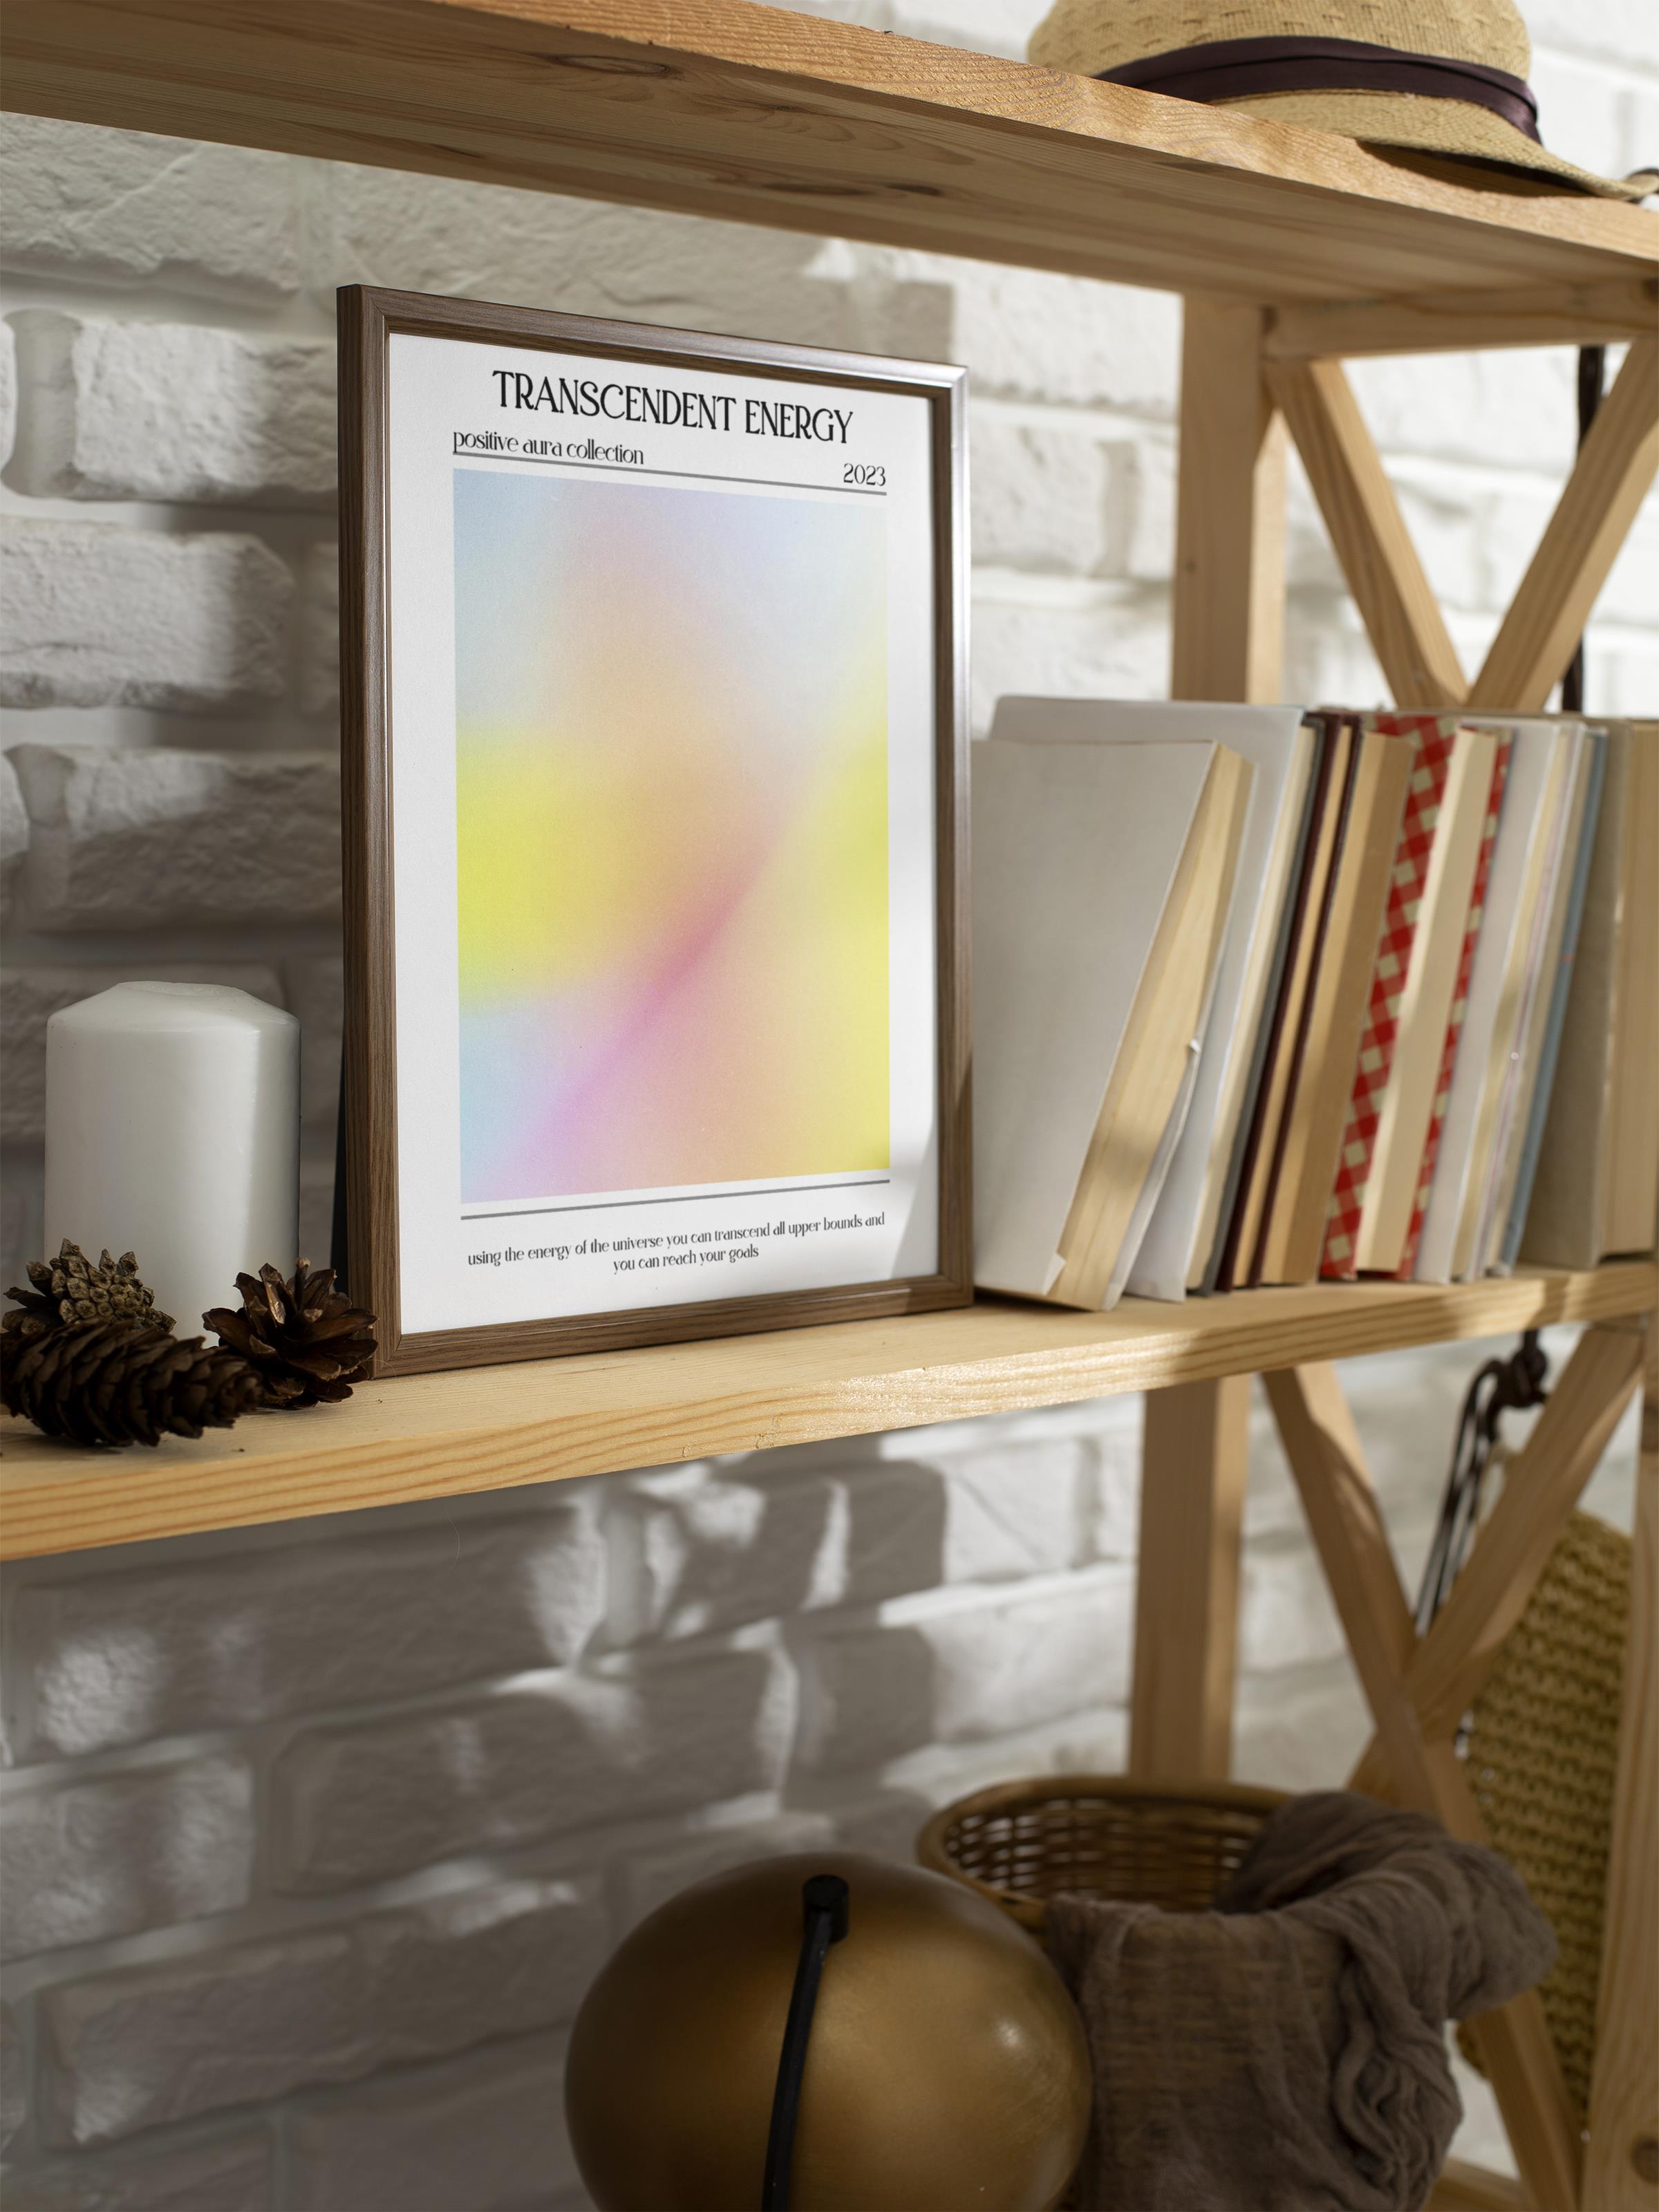 Çerçevesiz Poster, Aura Serisi NO:145 - Transcendent Energy, Melek Numaraları, Renkli Poster